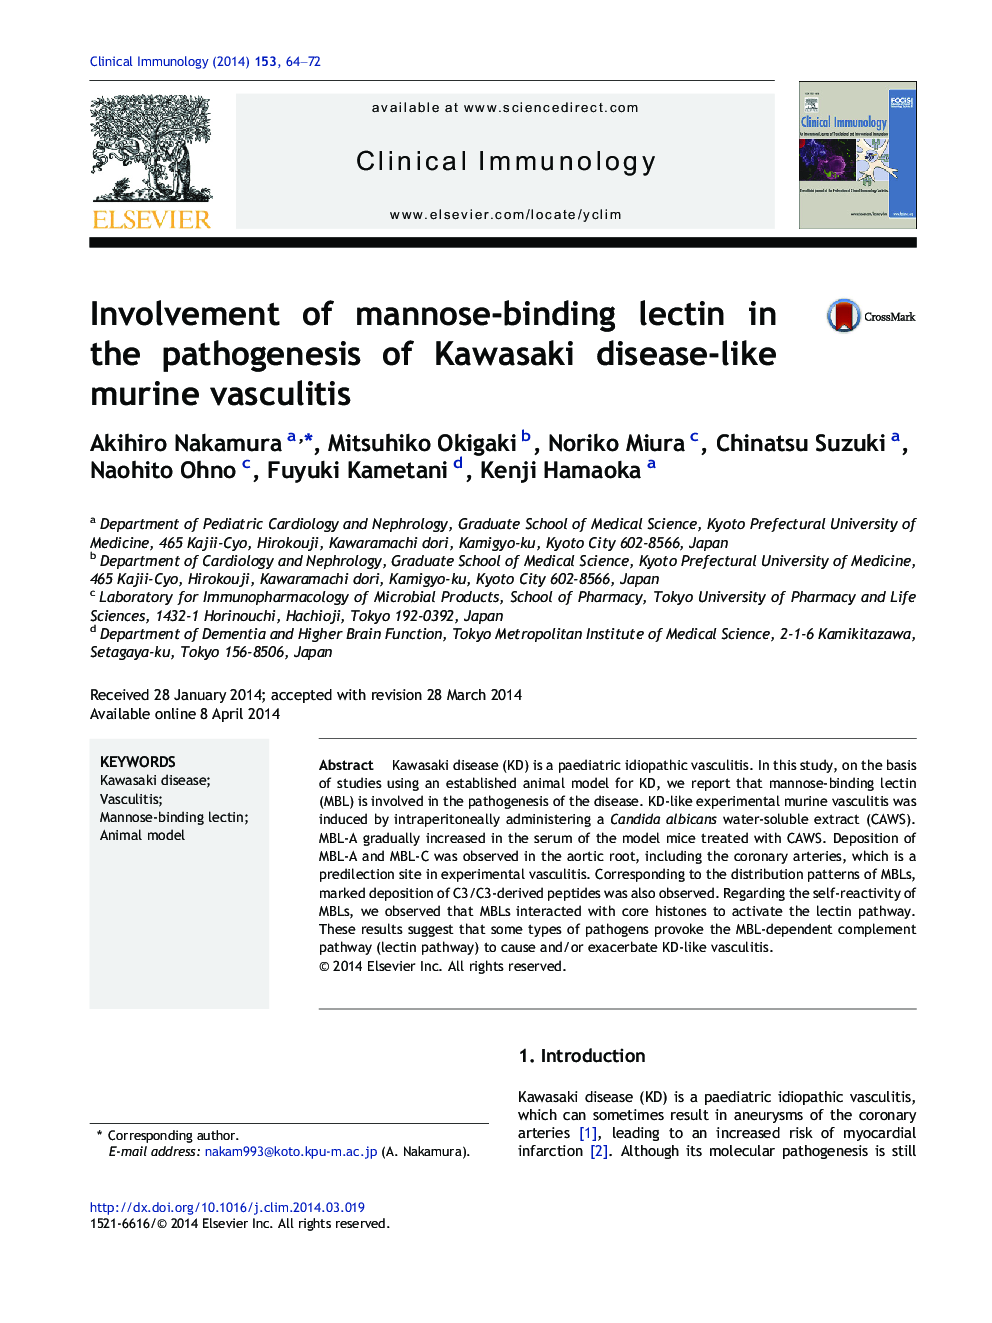 Involvement of mannose-binding lectin in the pathogenesis of Kawasaki disease-like murine vasculitis